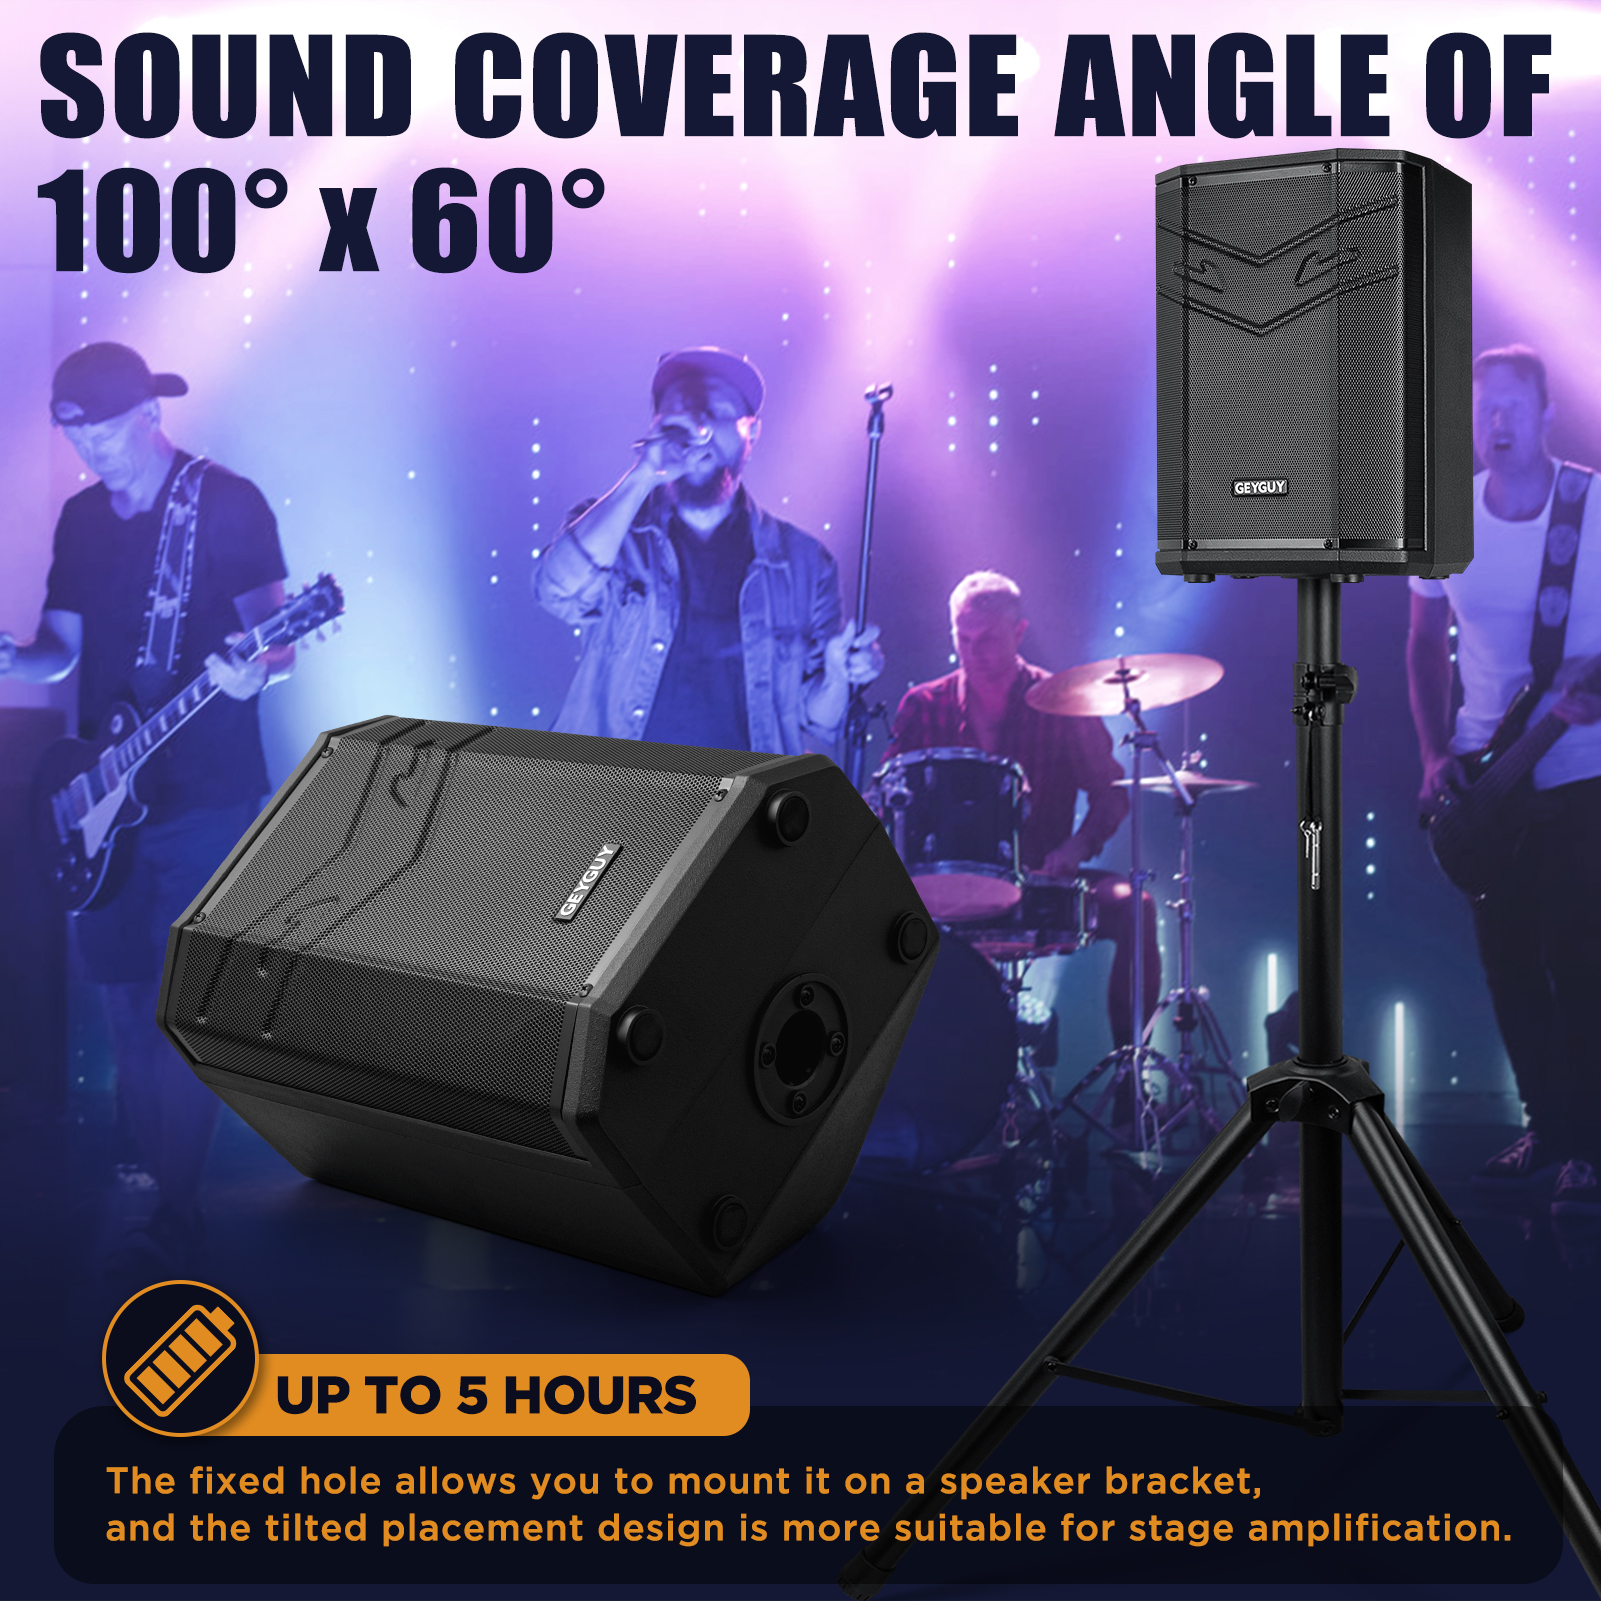 GPSK-4 Portable Karaoke Machine with 2 wireless mics - 